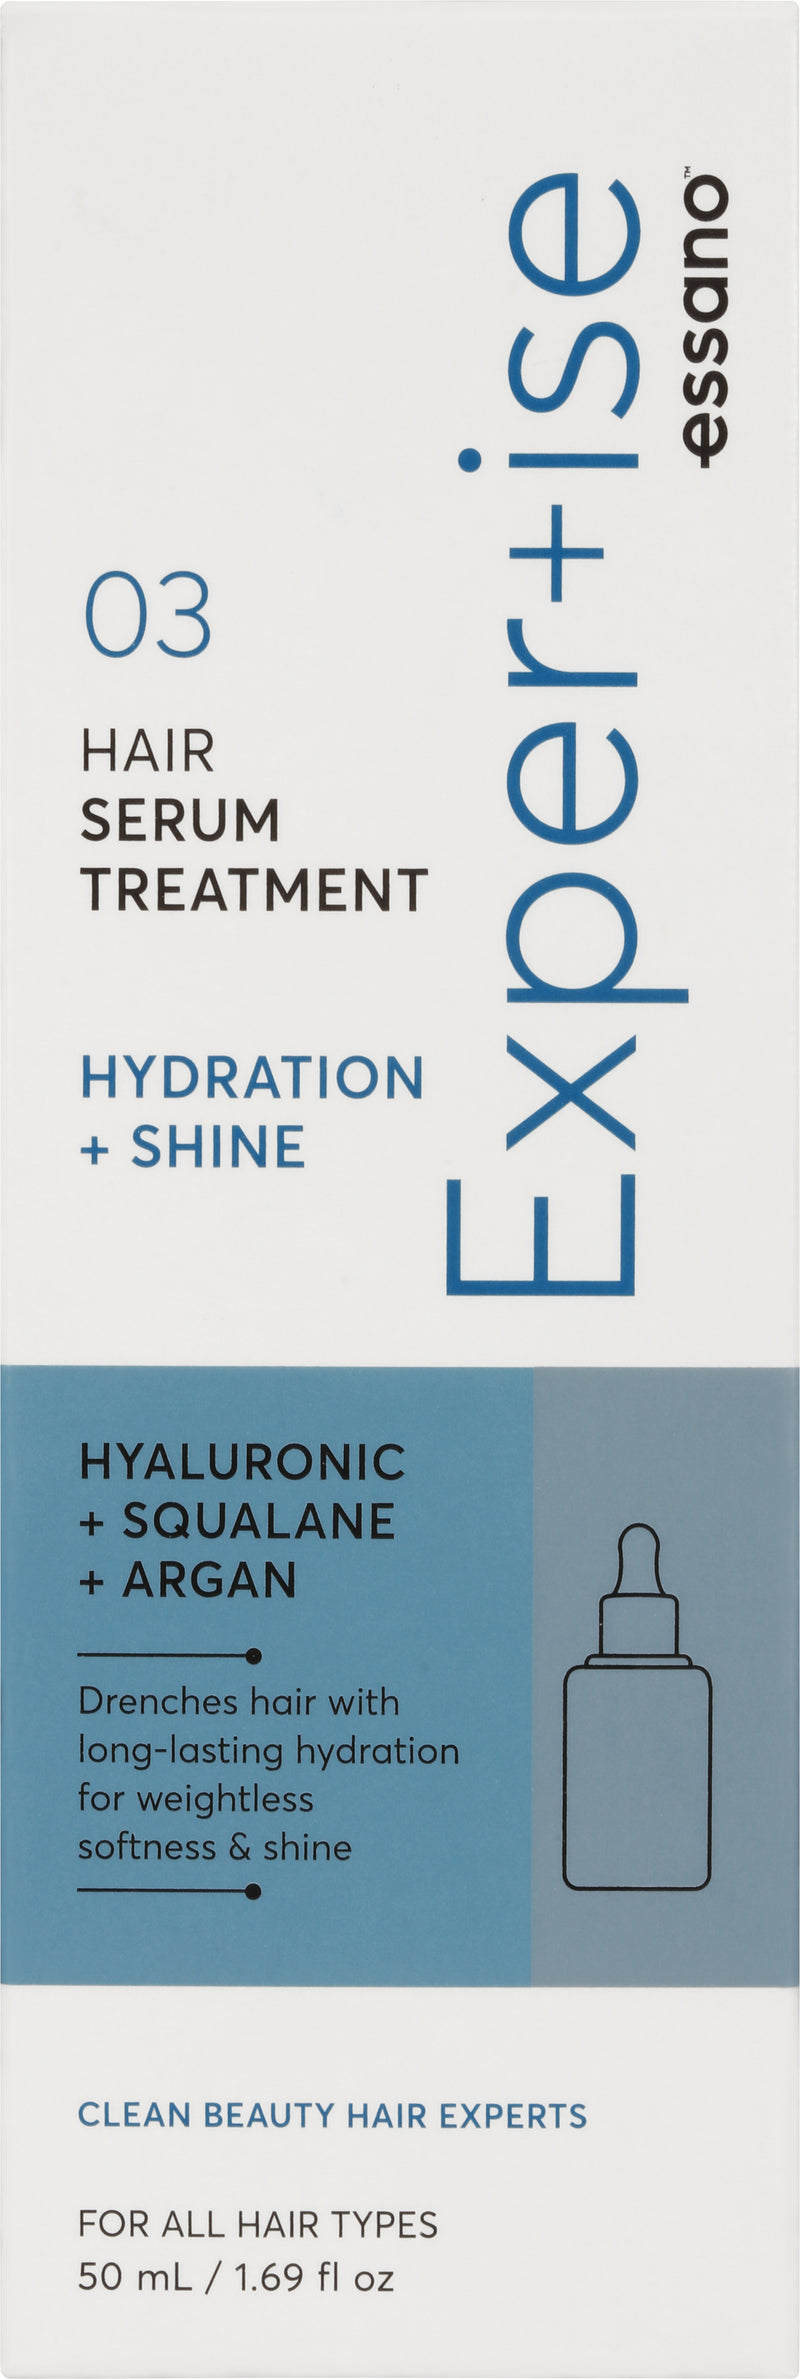 Essano Expertise Hydration + Shine Treatment 50ml